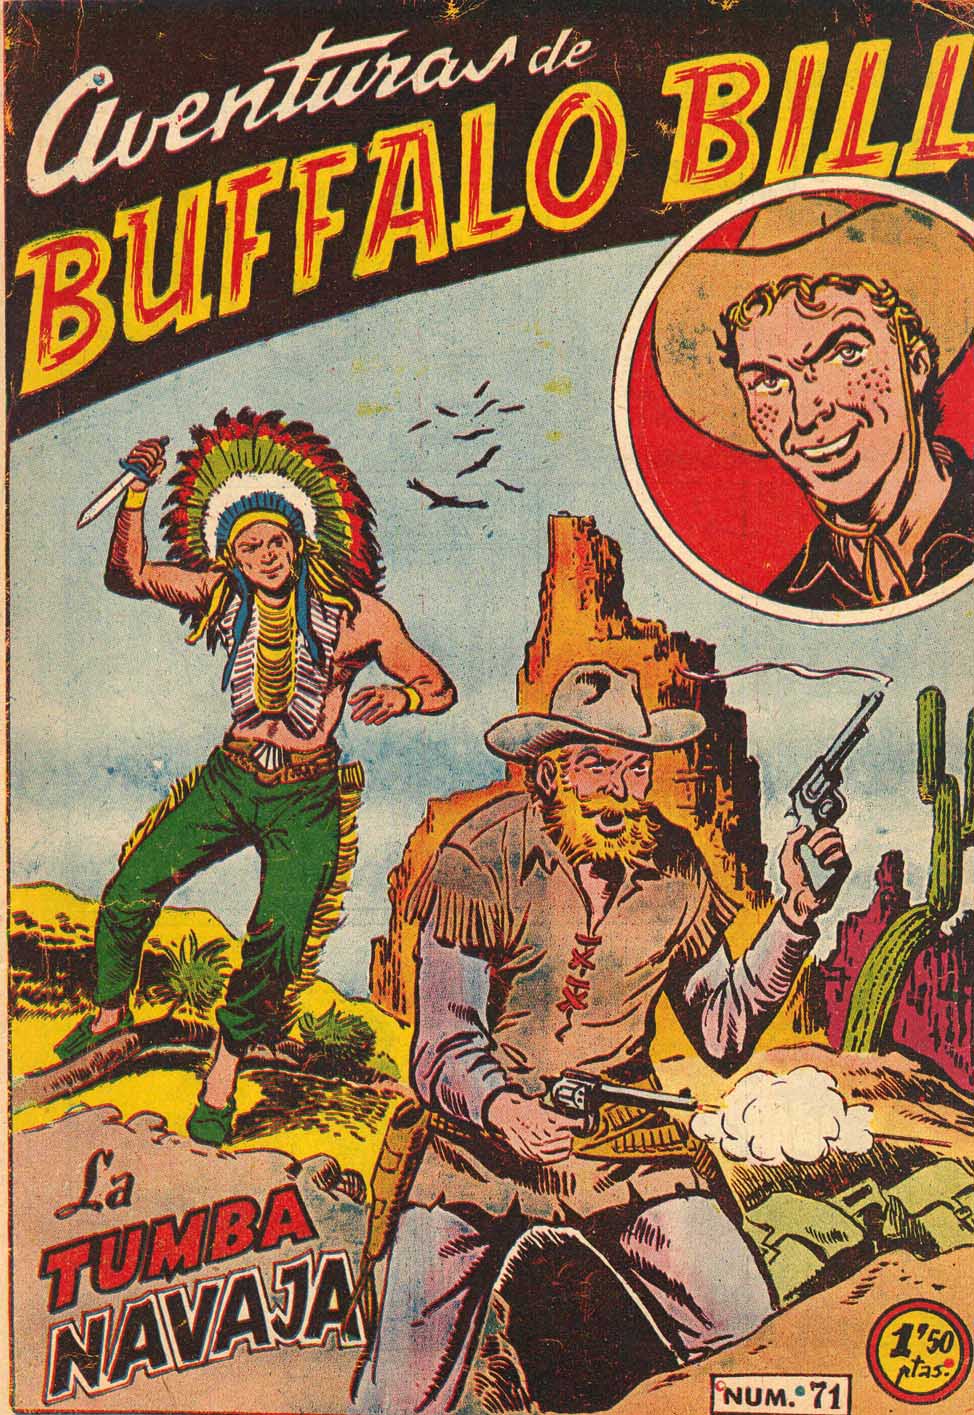 Comic Book Cover For Aventuras de Buffalo Bill 71 La tumba navaja